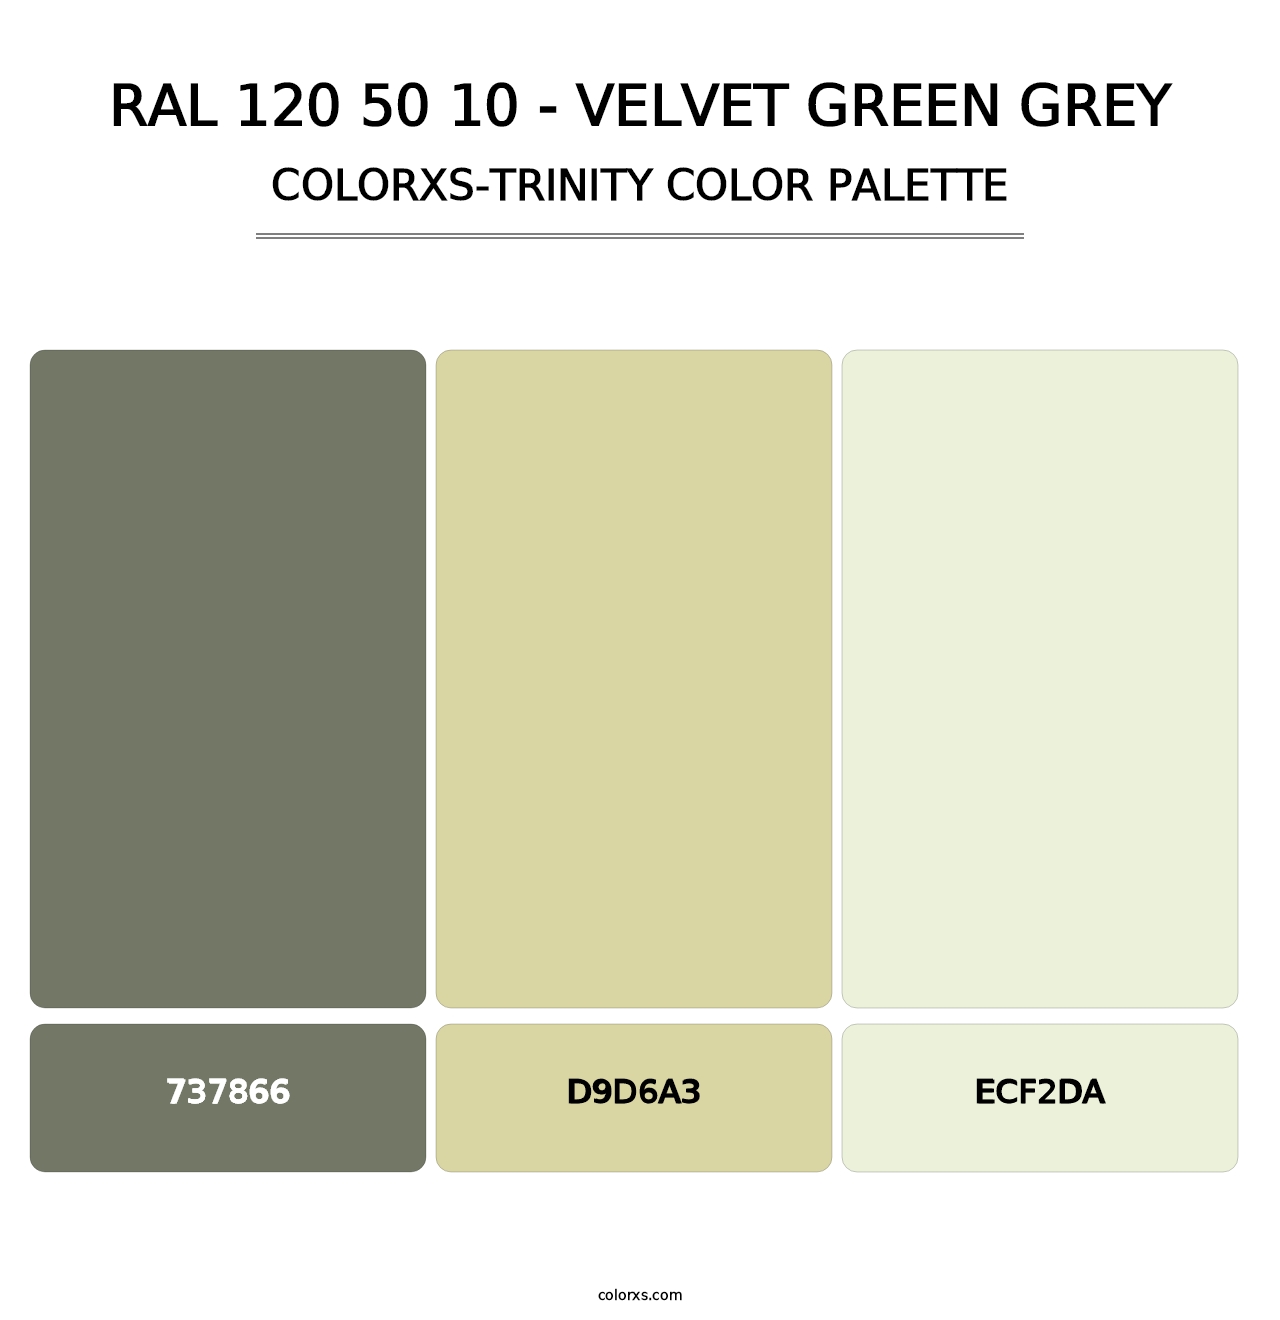 RAL 120 50 10 - Velvet Green Grey - Colorxs Trinity Palette